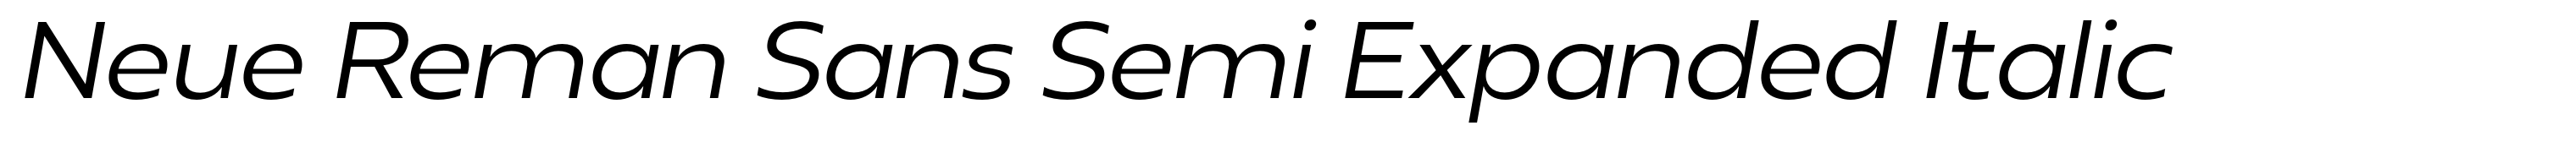 Neue Reman Sans Semi Expanded Italic